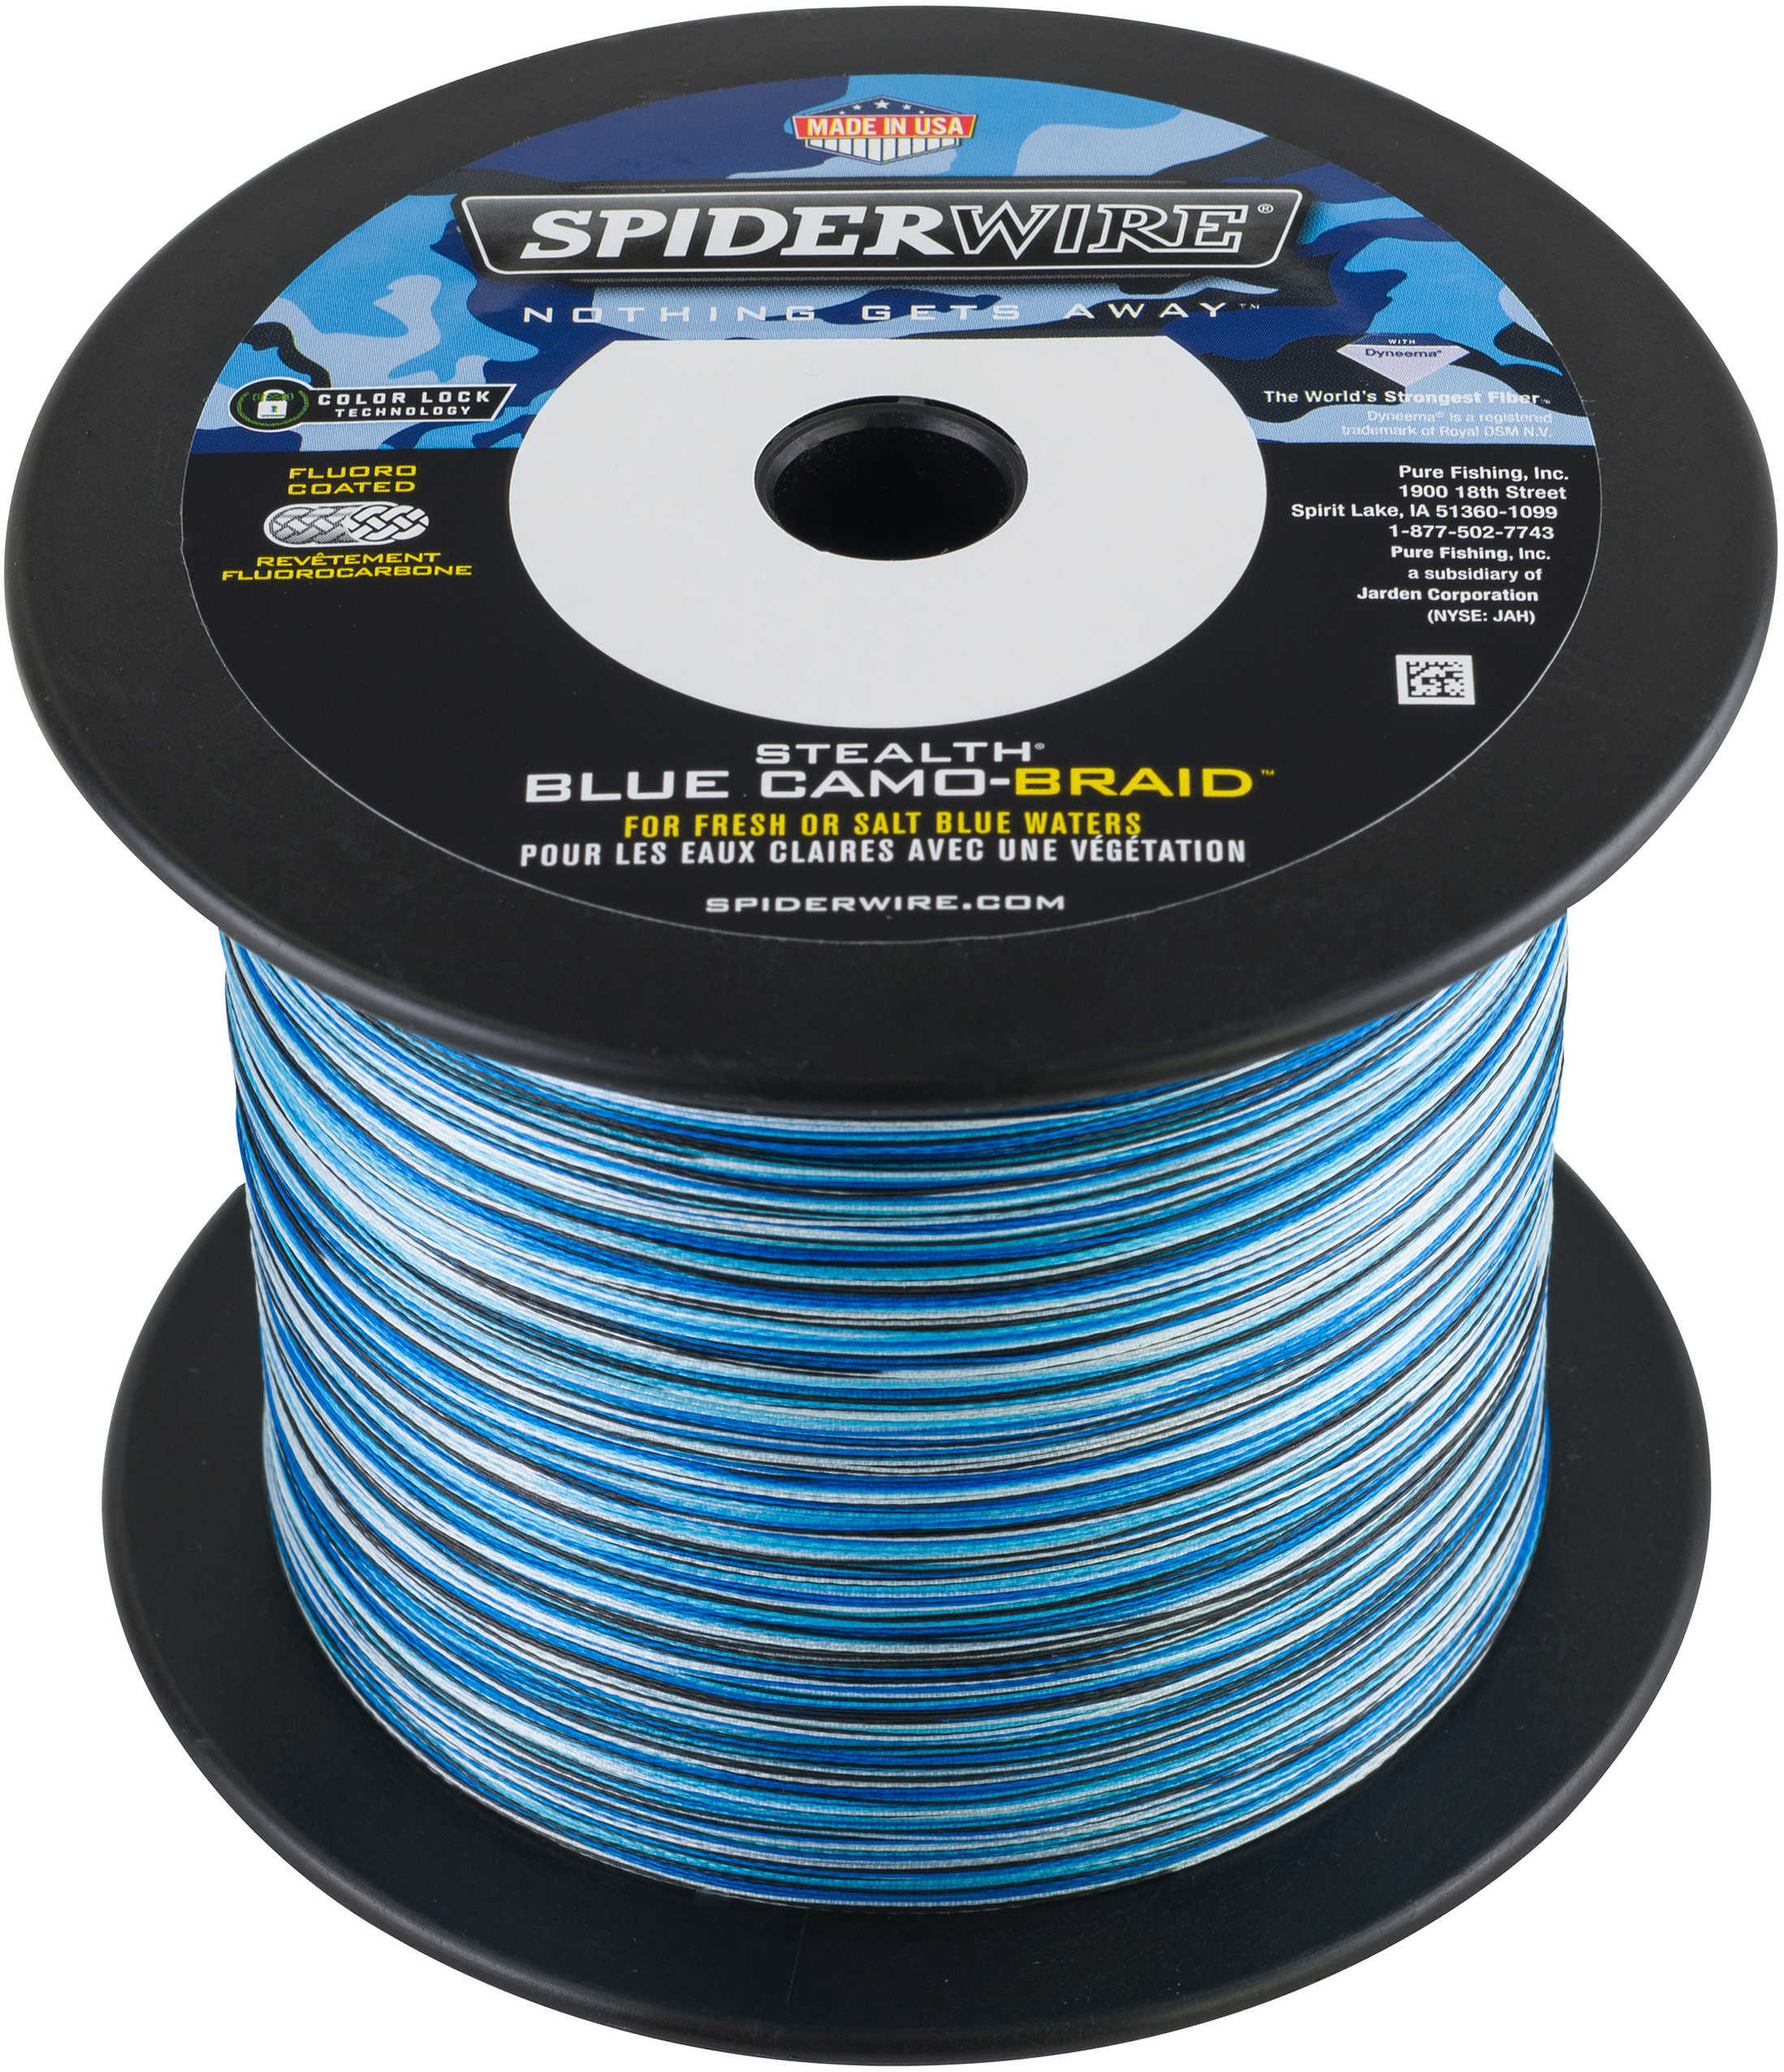 Spiderwire Stealth Braid 3000 Yards , 40 lbs Strength, 0.013" Diameter, Blue Camo Md: 1370466